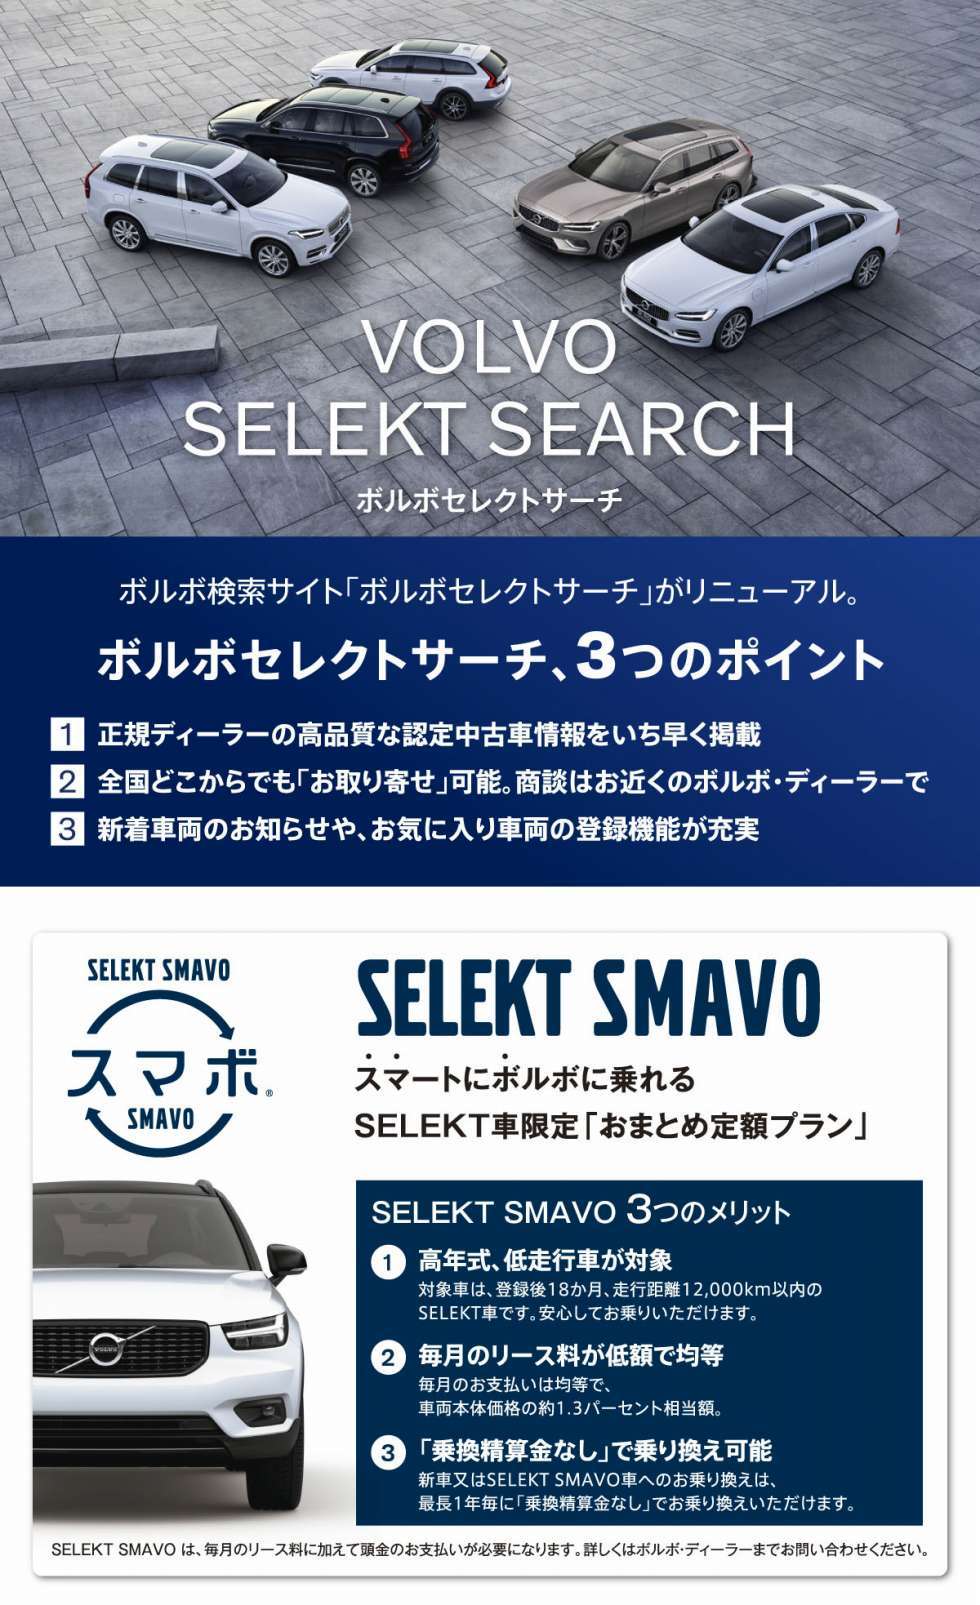 Volvo Selekt ご成約キャンペーンスタート ディーラー最新情報 ボルボ カー 国立